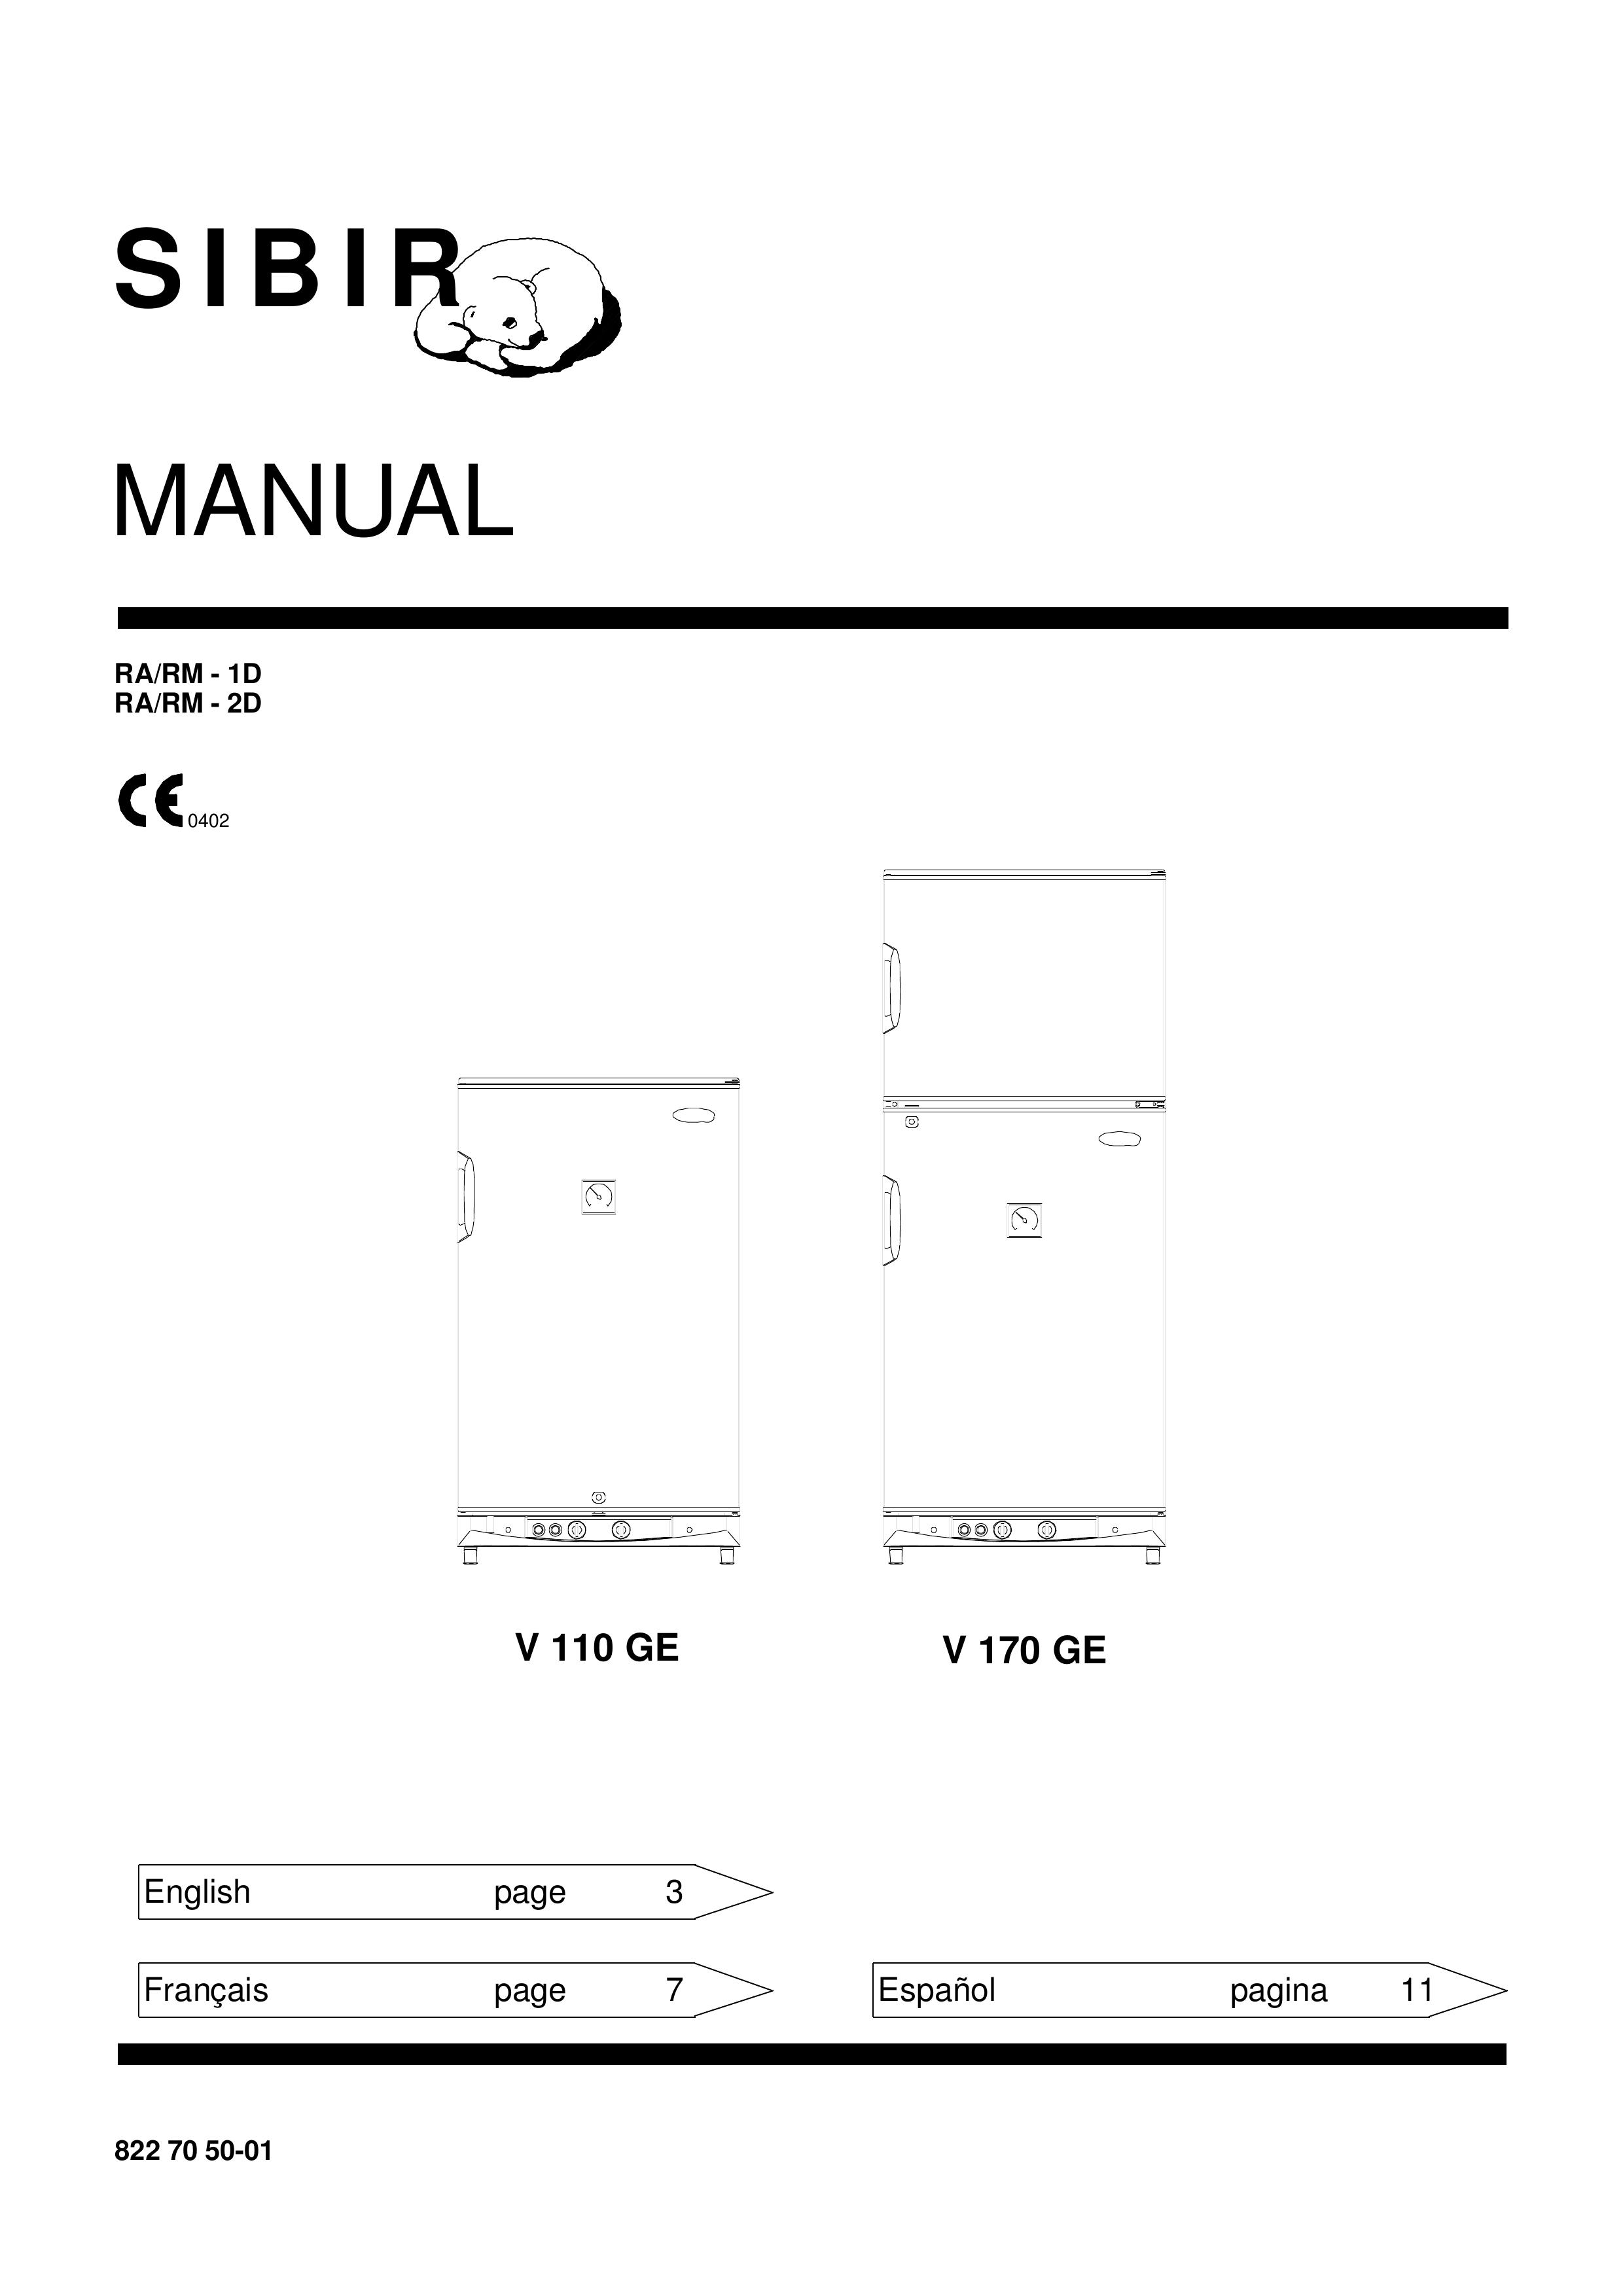 Sibir Optics V 110 GE Refrigerator User Manual